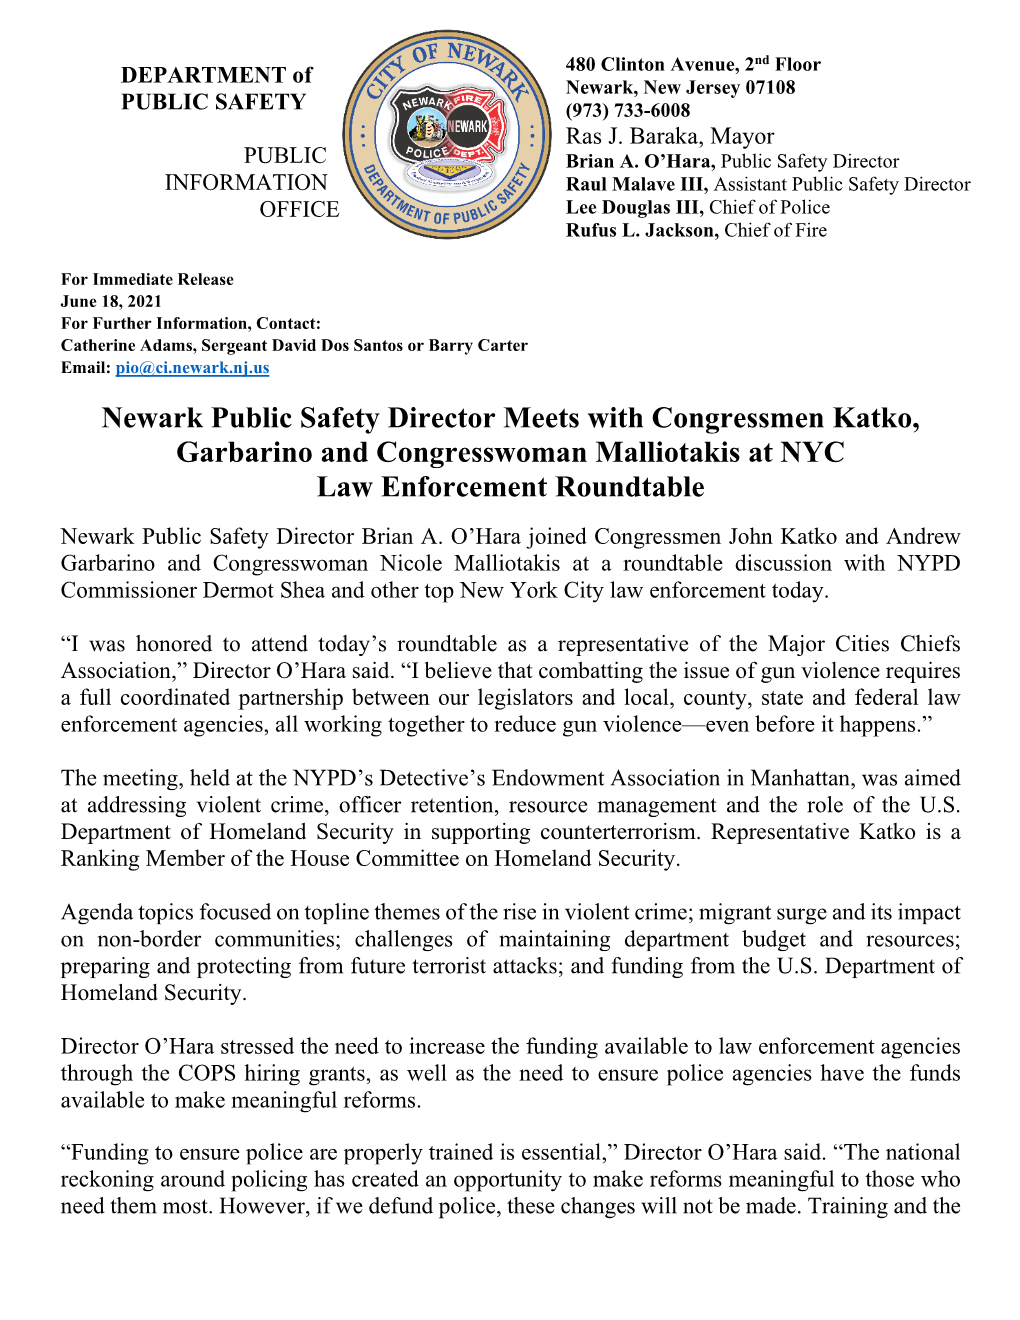 Newark Public Safety Director Meets with Congressmen Katko, Garbarino and Congresswoman Malliotakis at NYC Law Enforcement Roundtable